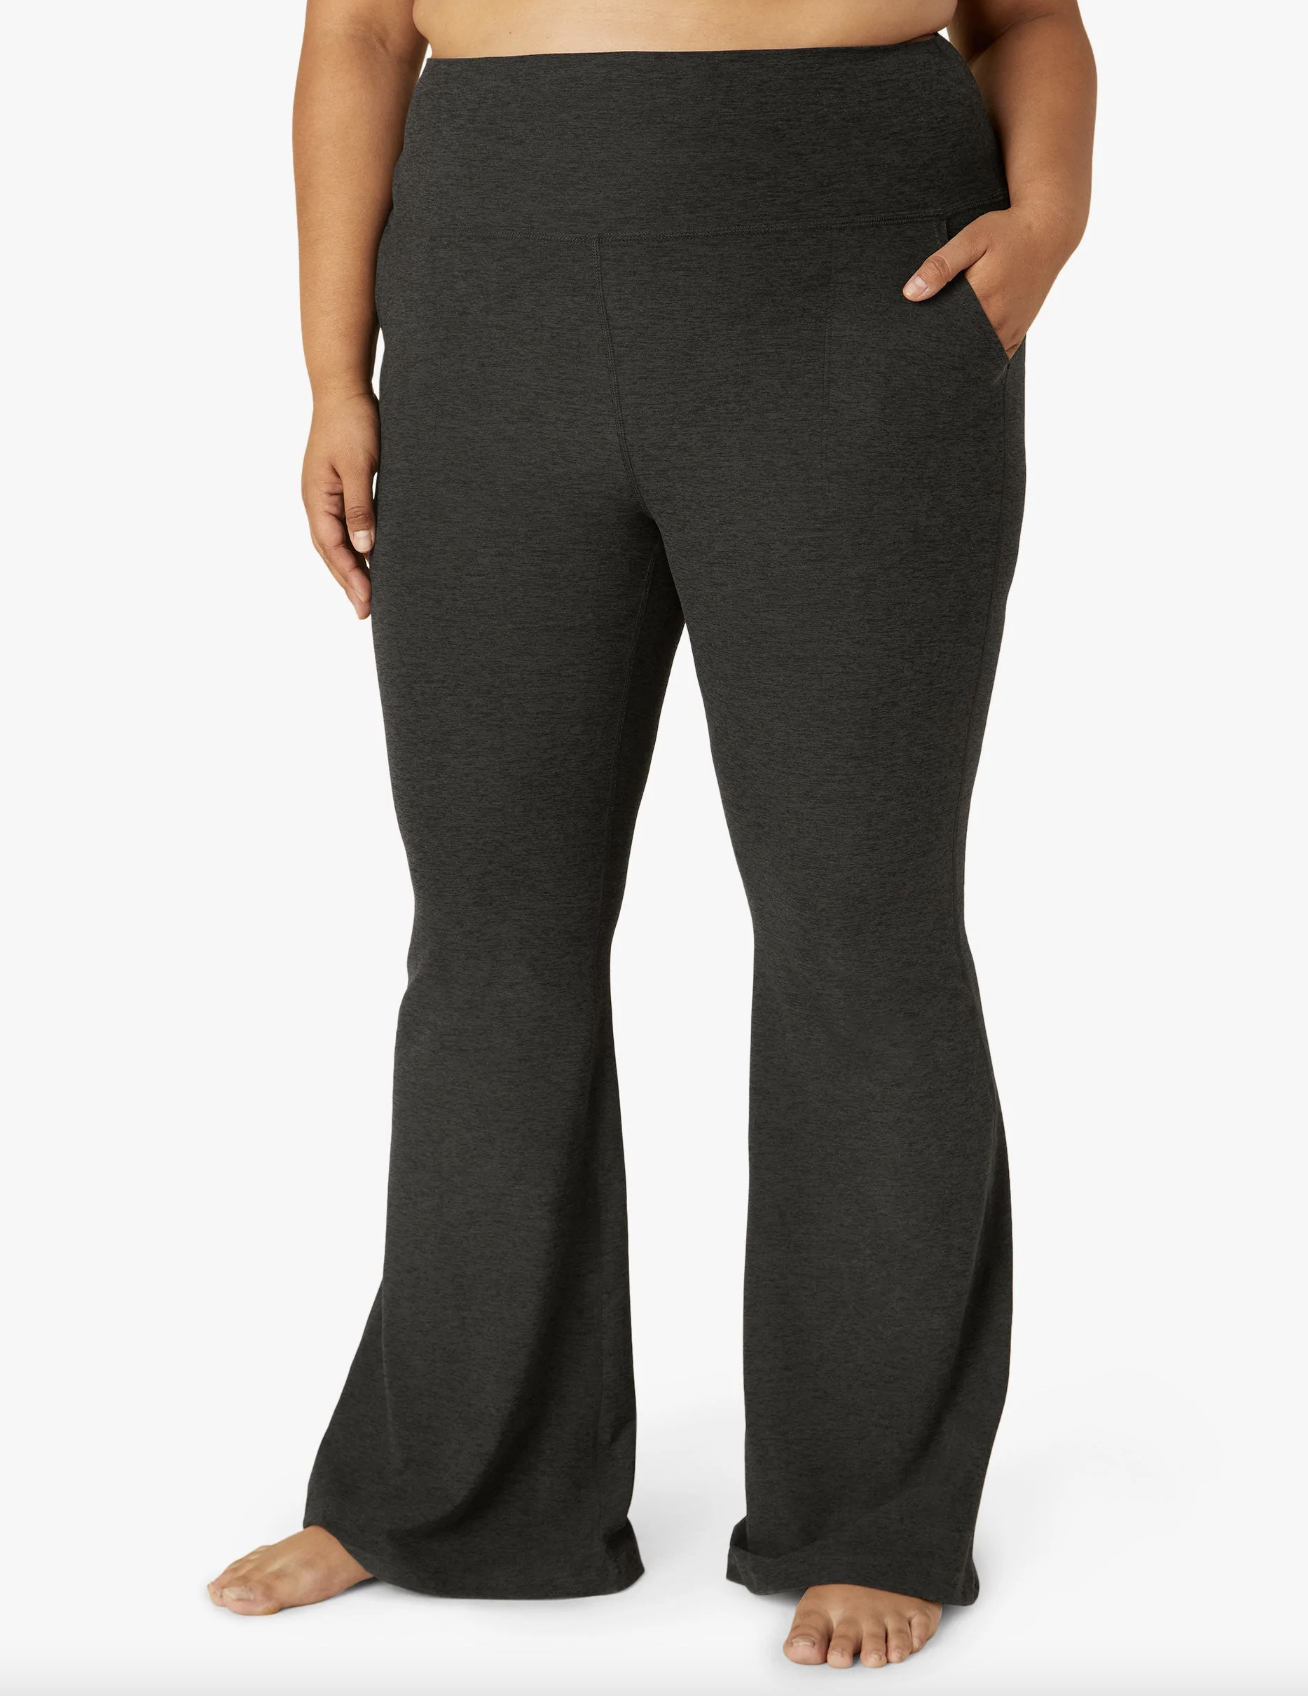 Dress Pants Casual Work Trousers Women Yoga Dress Pants for Office Business  | eBay